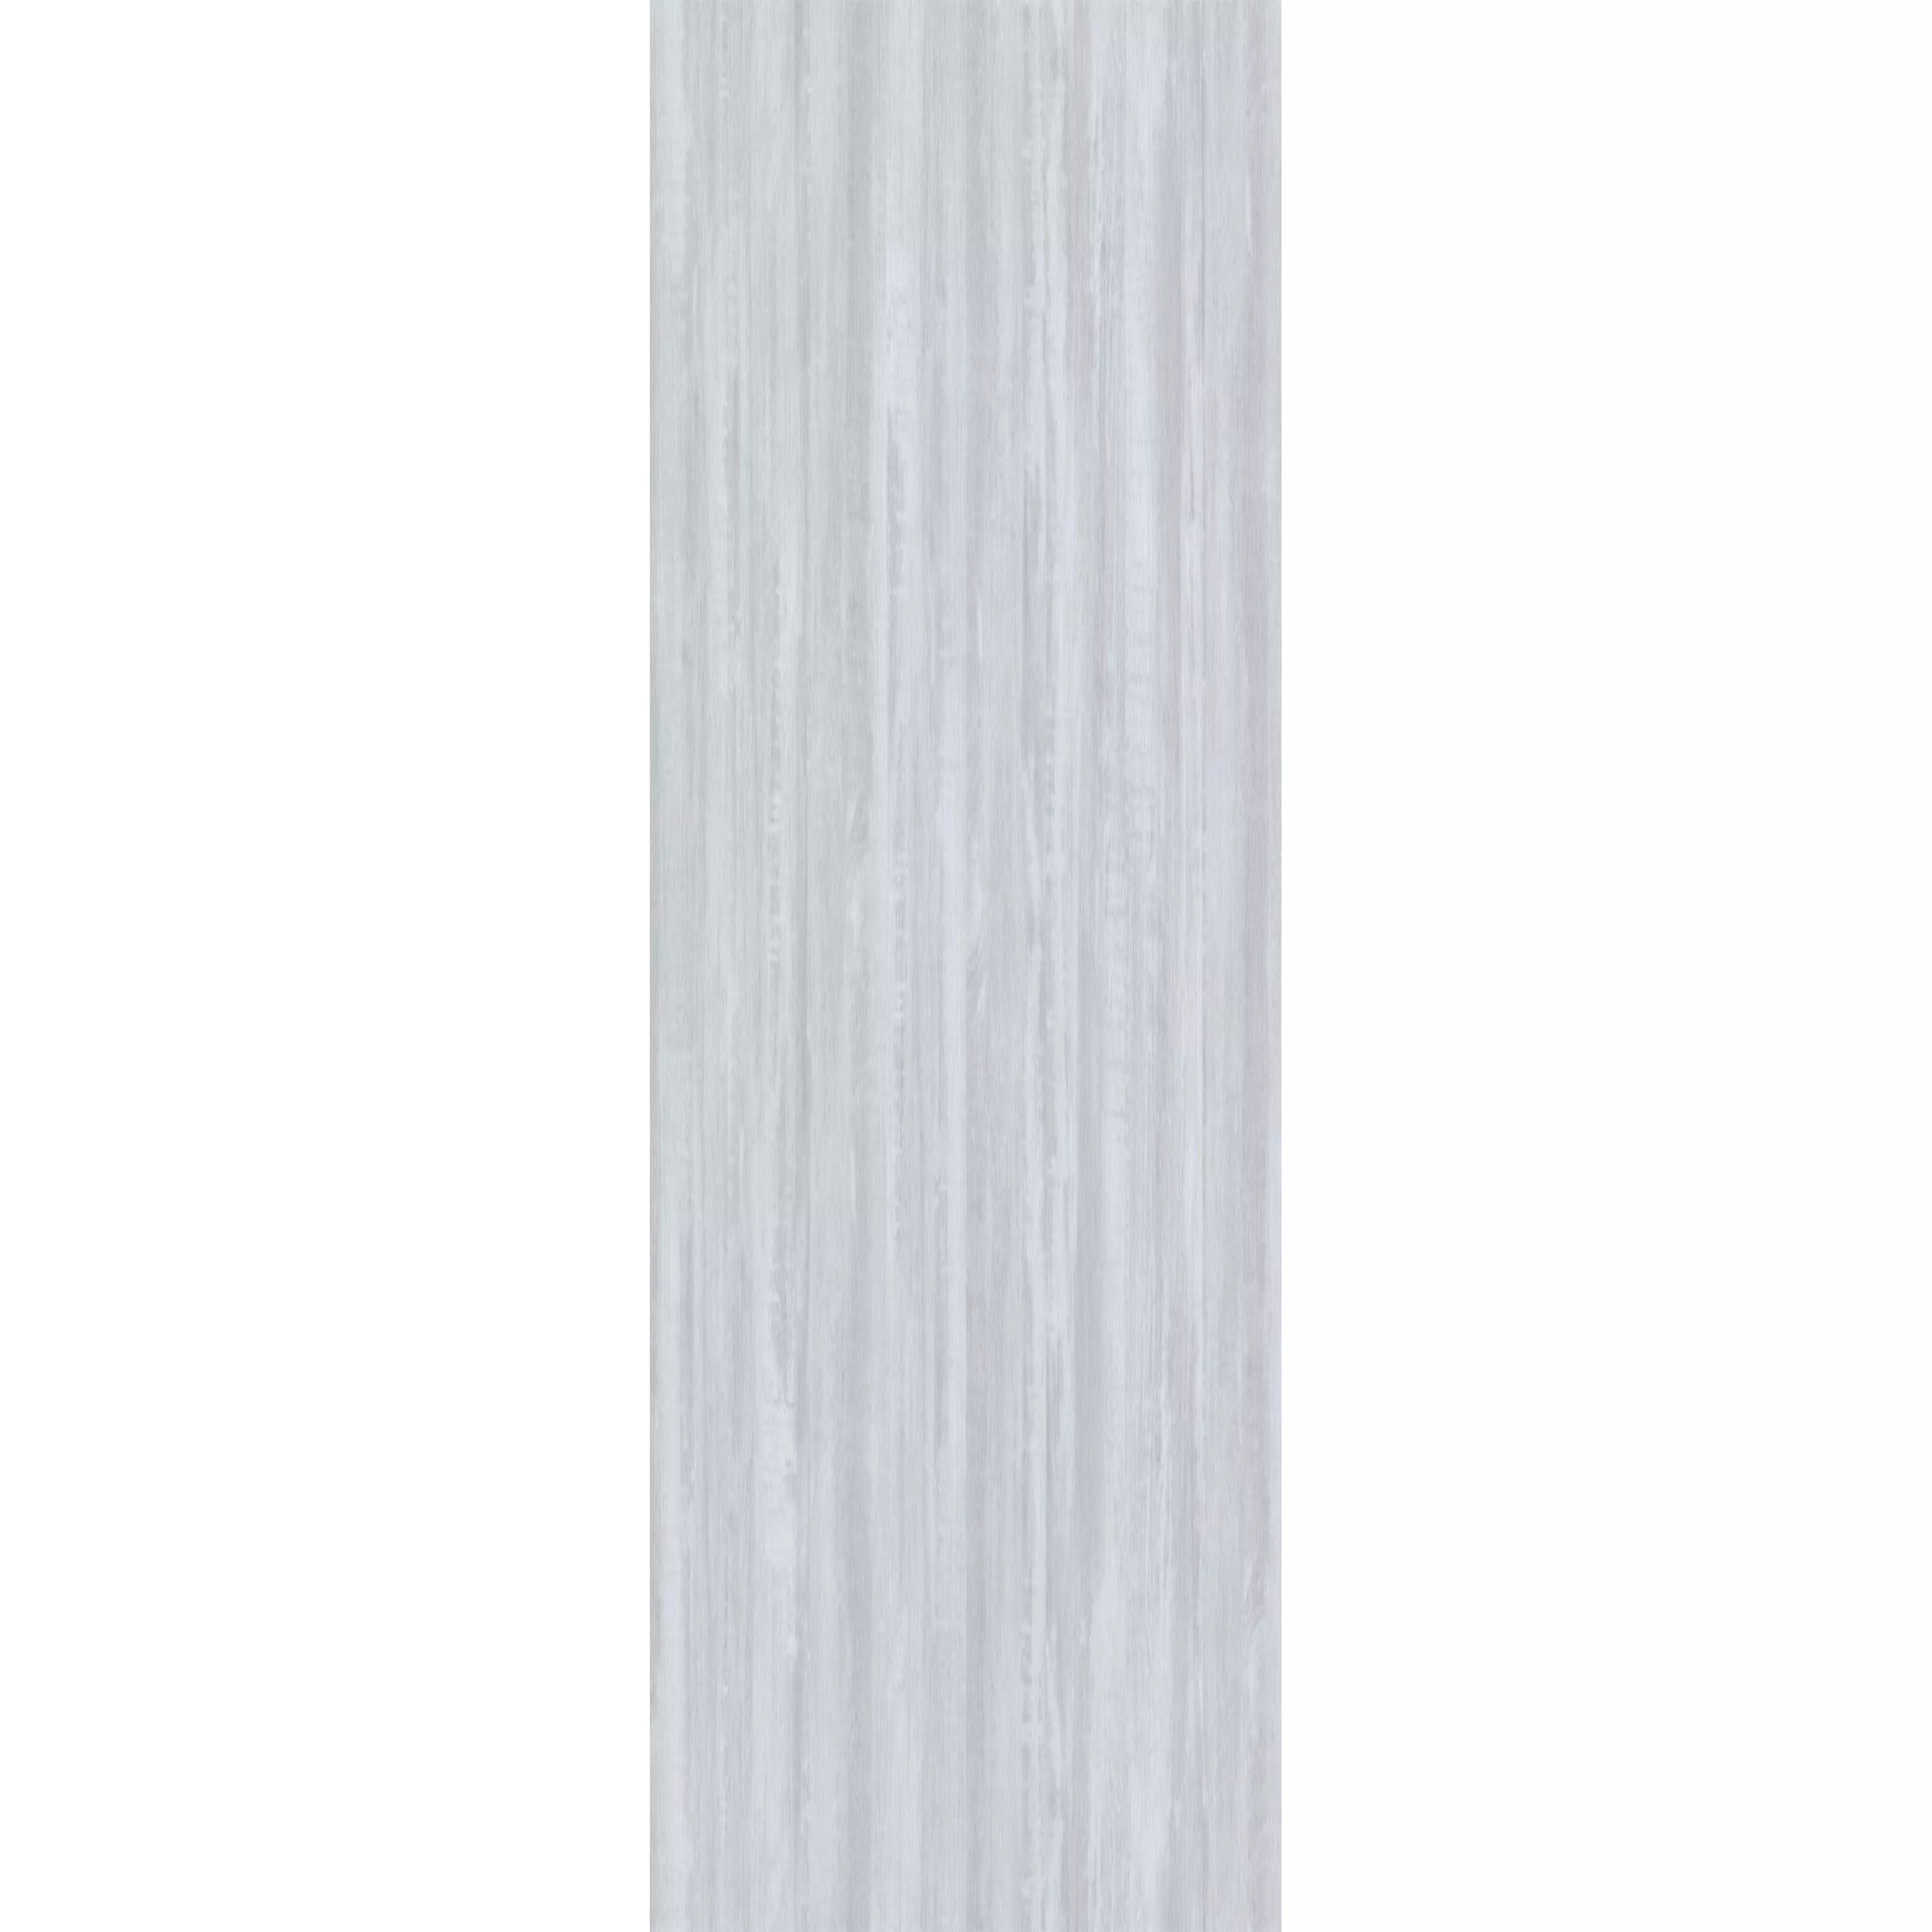 Vinylgulv Klikksystem Snowwood Hvit 17,2x121cm